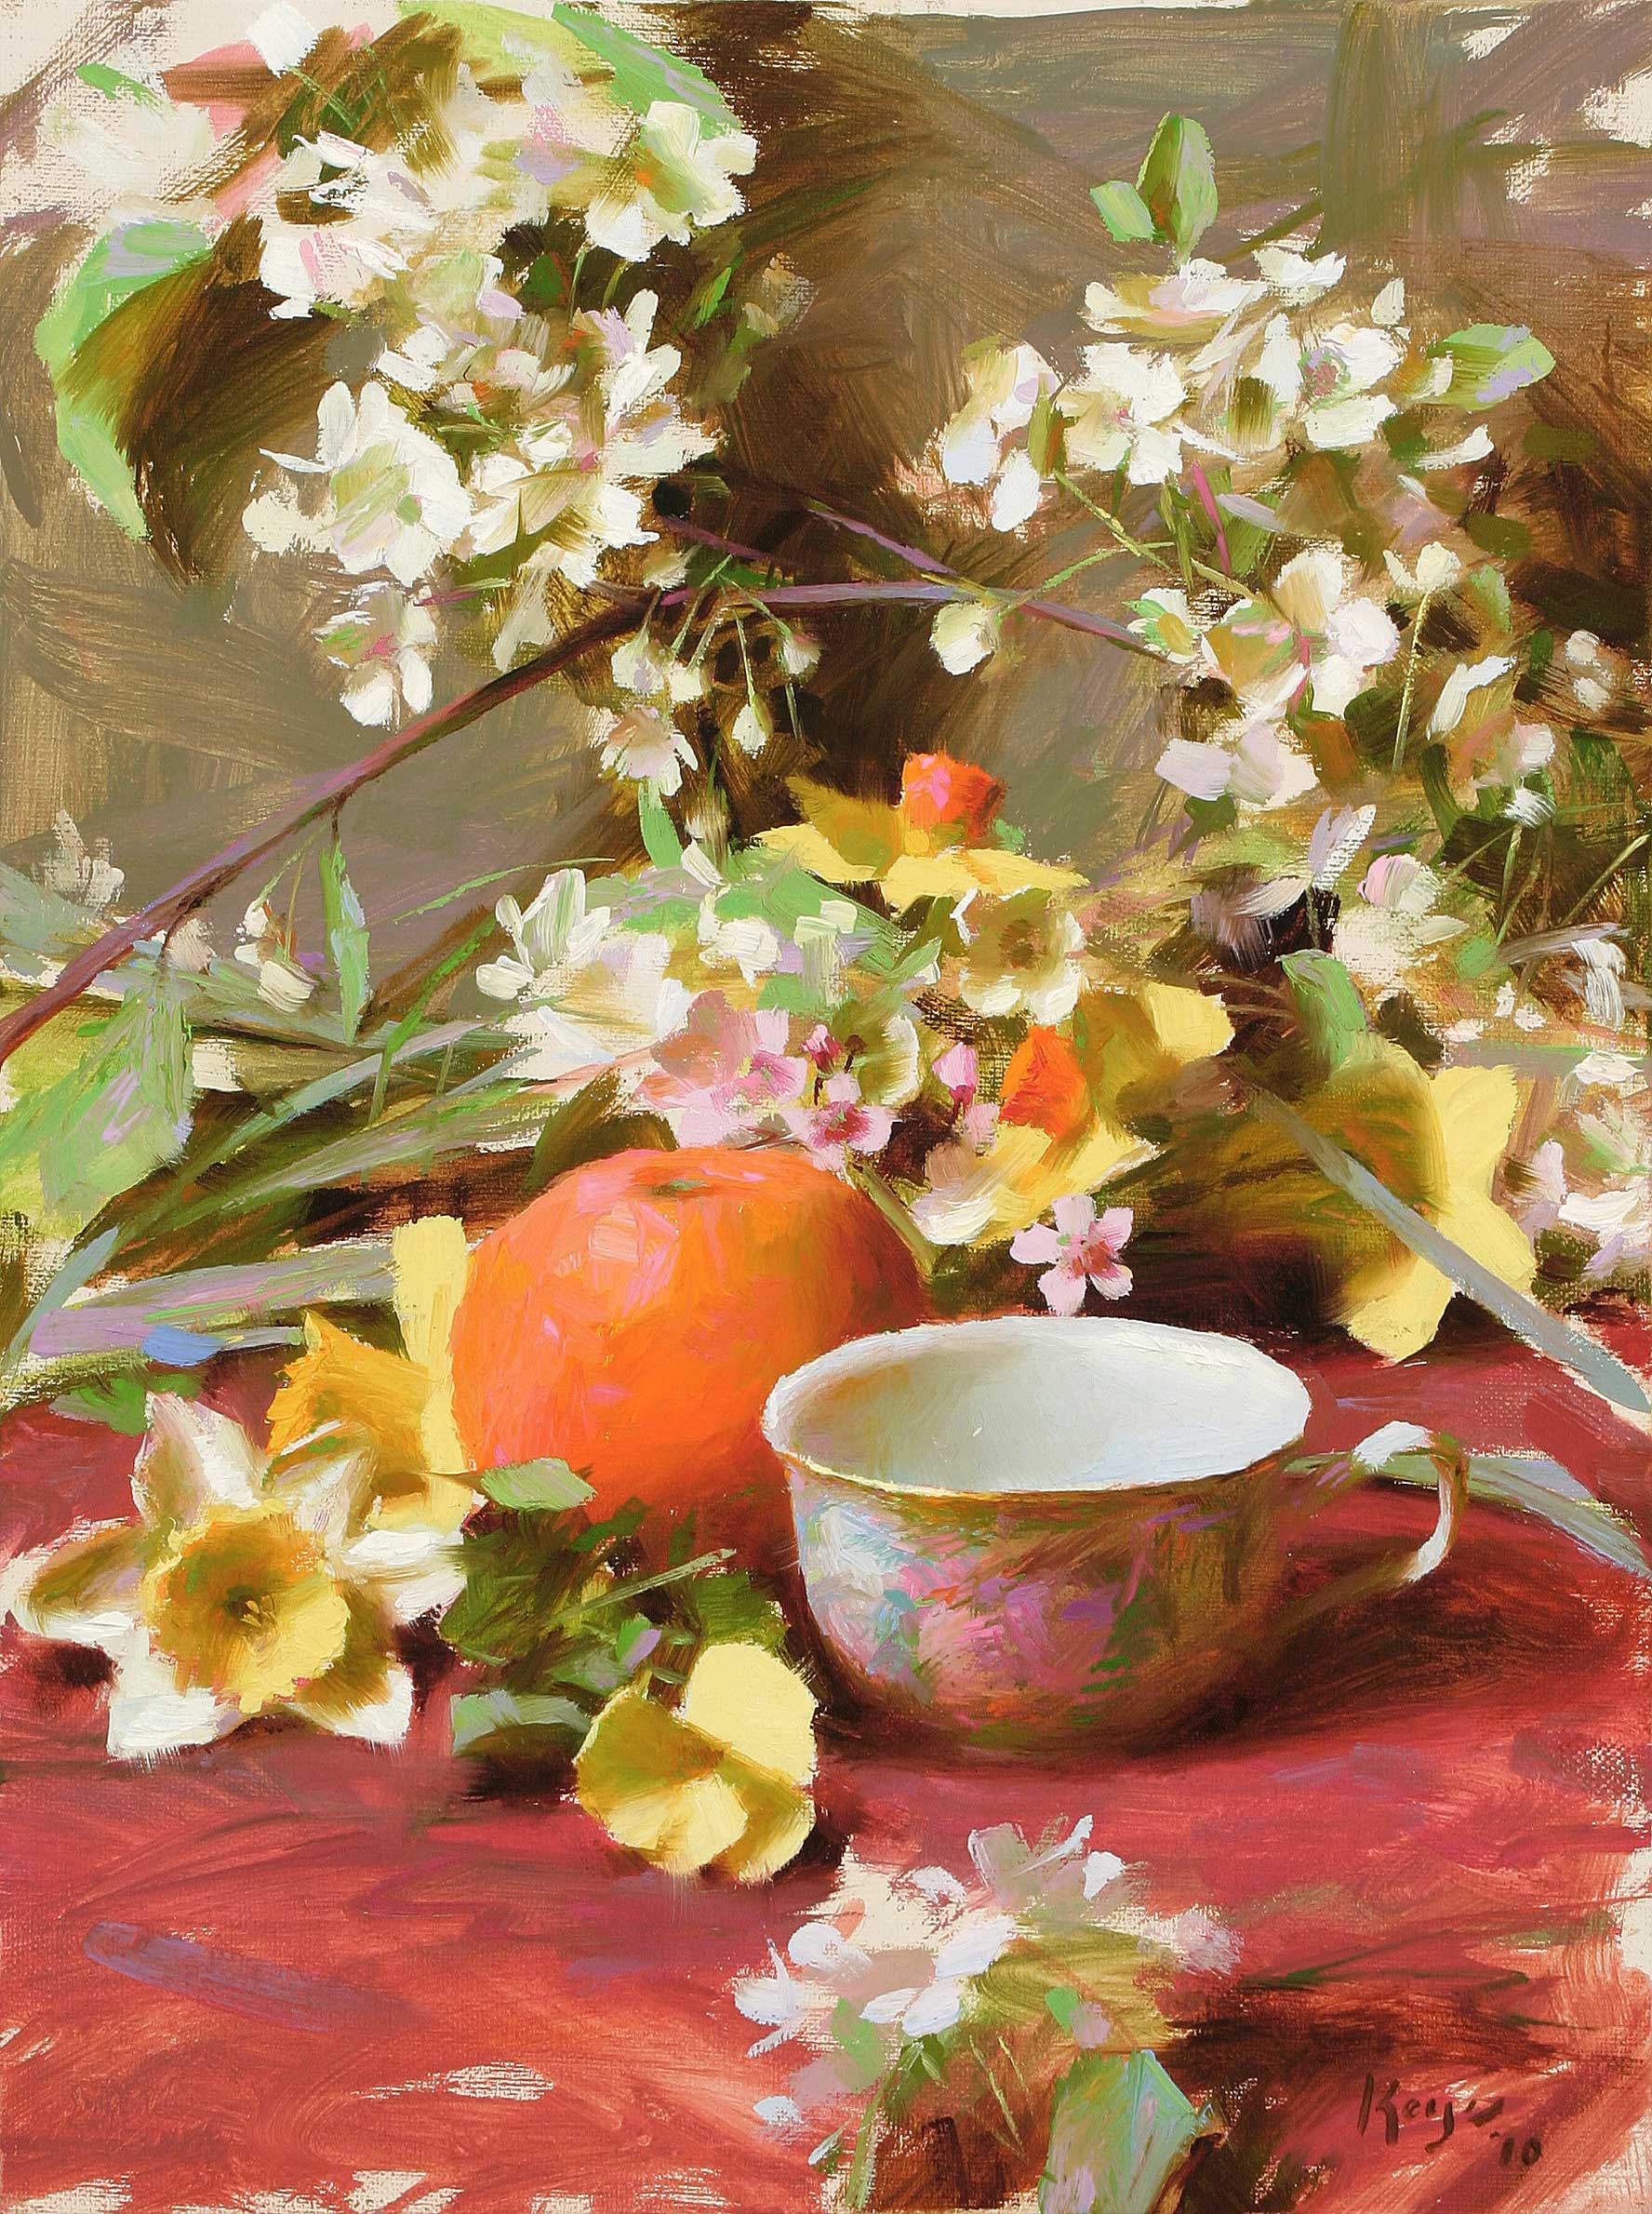 Daniel Keys, "Teacup with Blossoms," 2010 16” x 12”, oil on linen